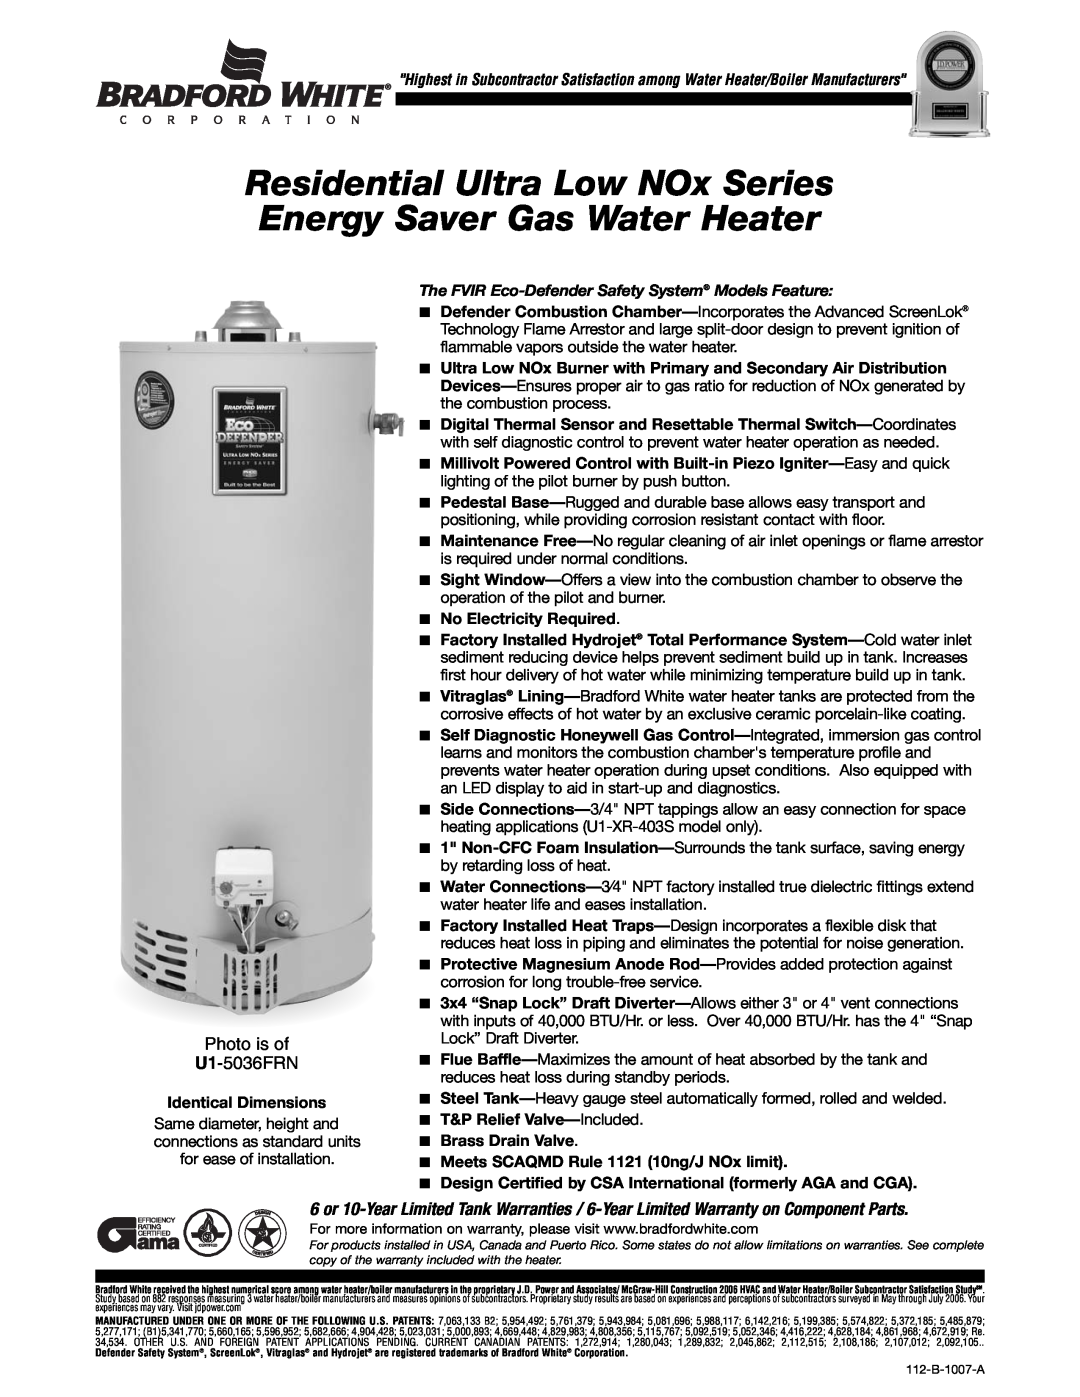 Bradford-White Corp U1-5036FRN warranty Residential Ultra Low NOx Series Energy Saver Gas Water Heater 